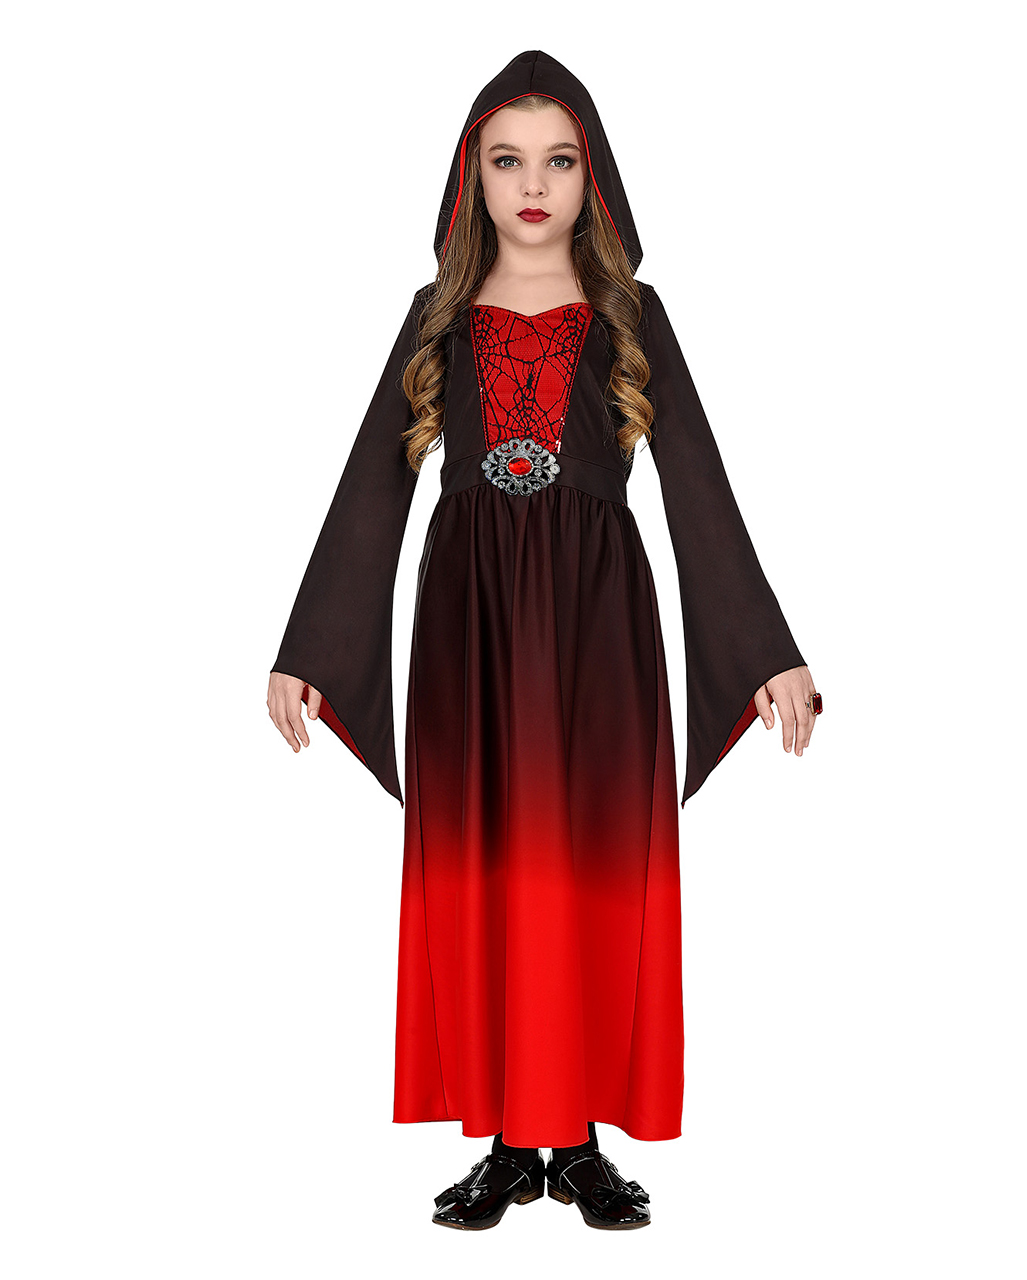 Rotes Gothicgirl Kostum Fur Kinder Fur Halloween Karneval Universe